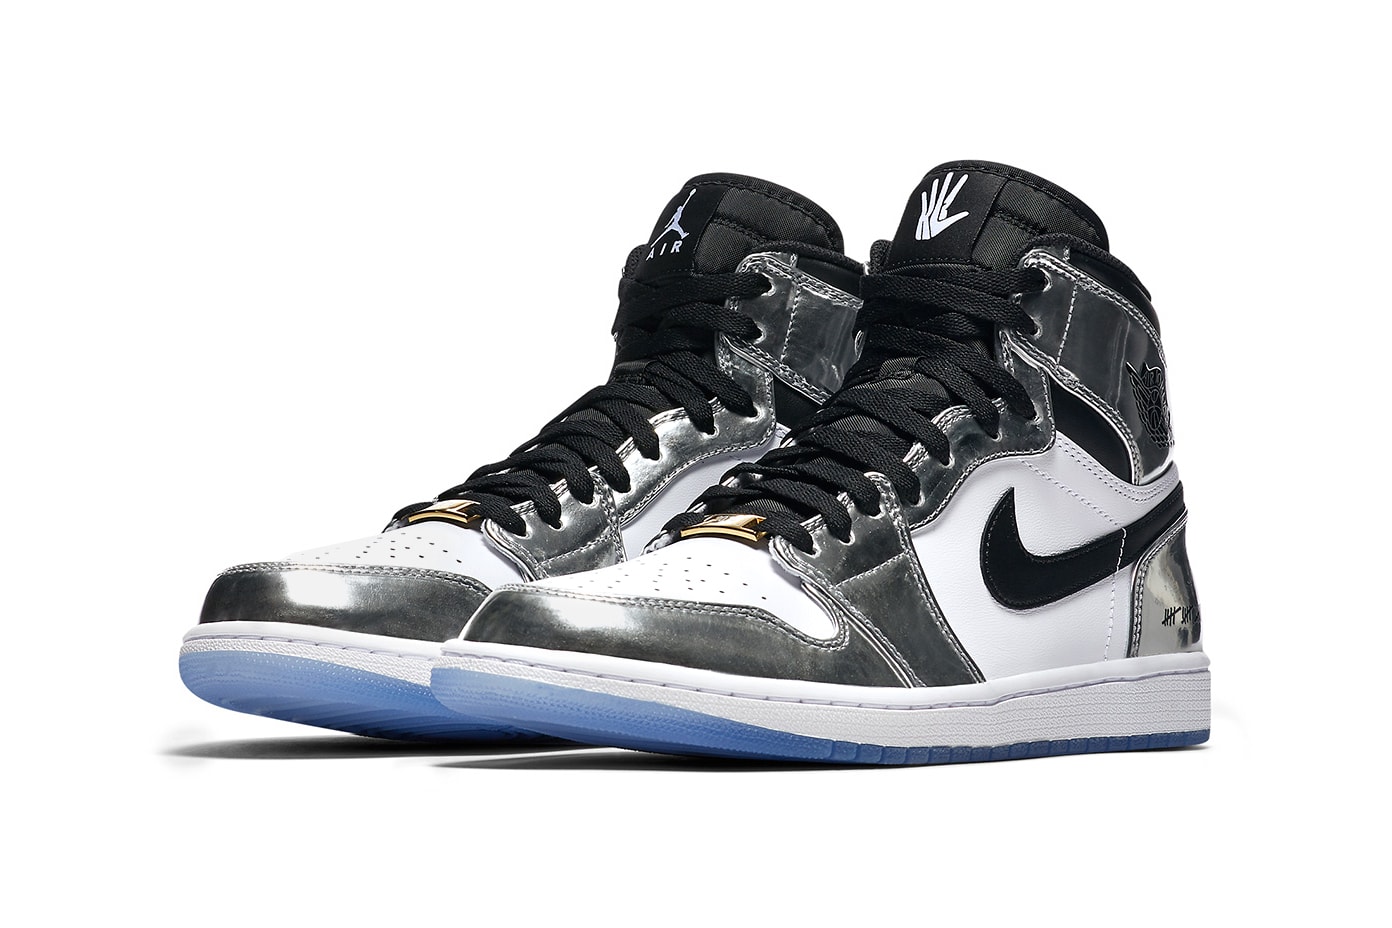 Nike Air Jordan 1 Retro High x Kawhi Leonard Sneakers Kicks Trainers Shoes Closer Look Silver Black White Blue Colorway Basketball 2014 MVP